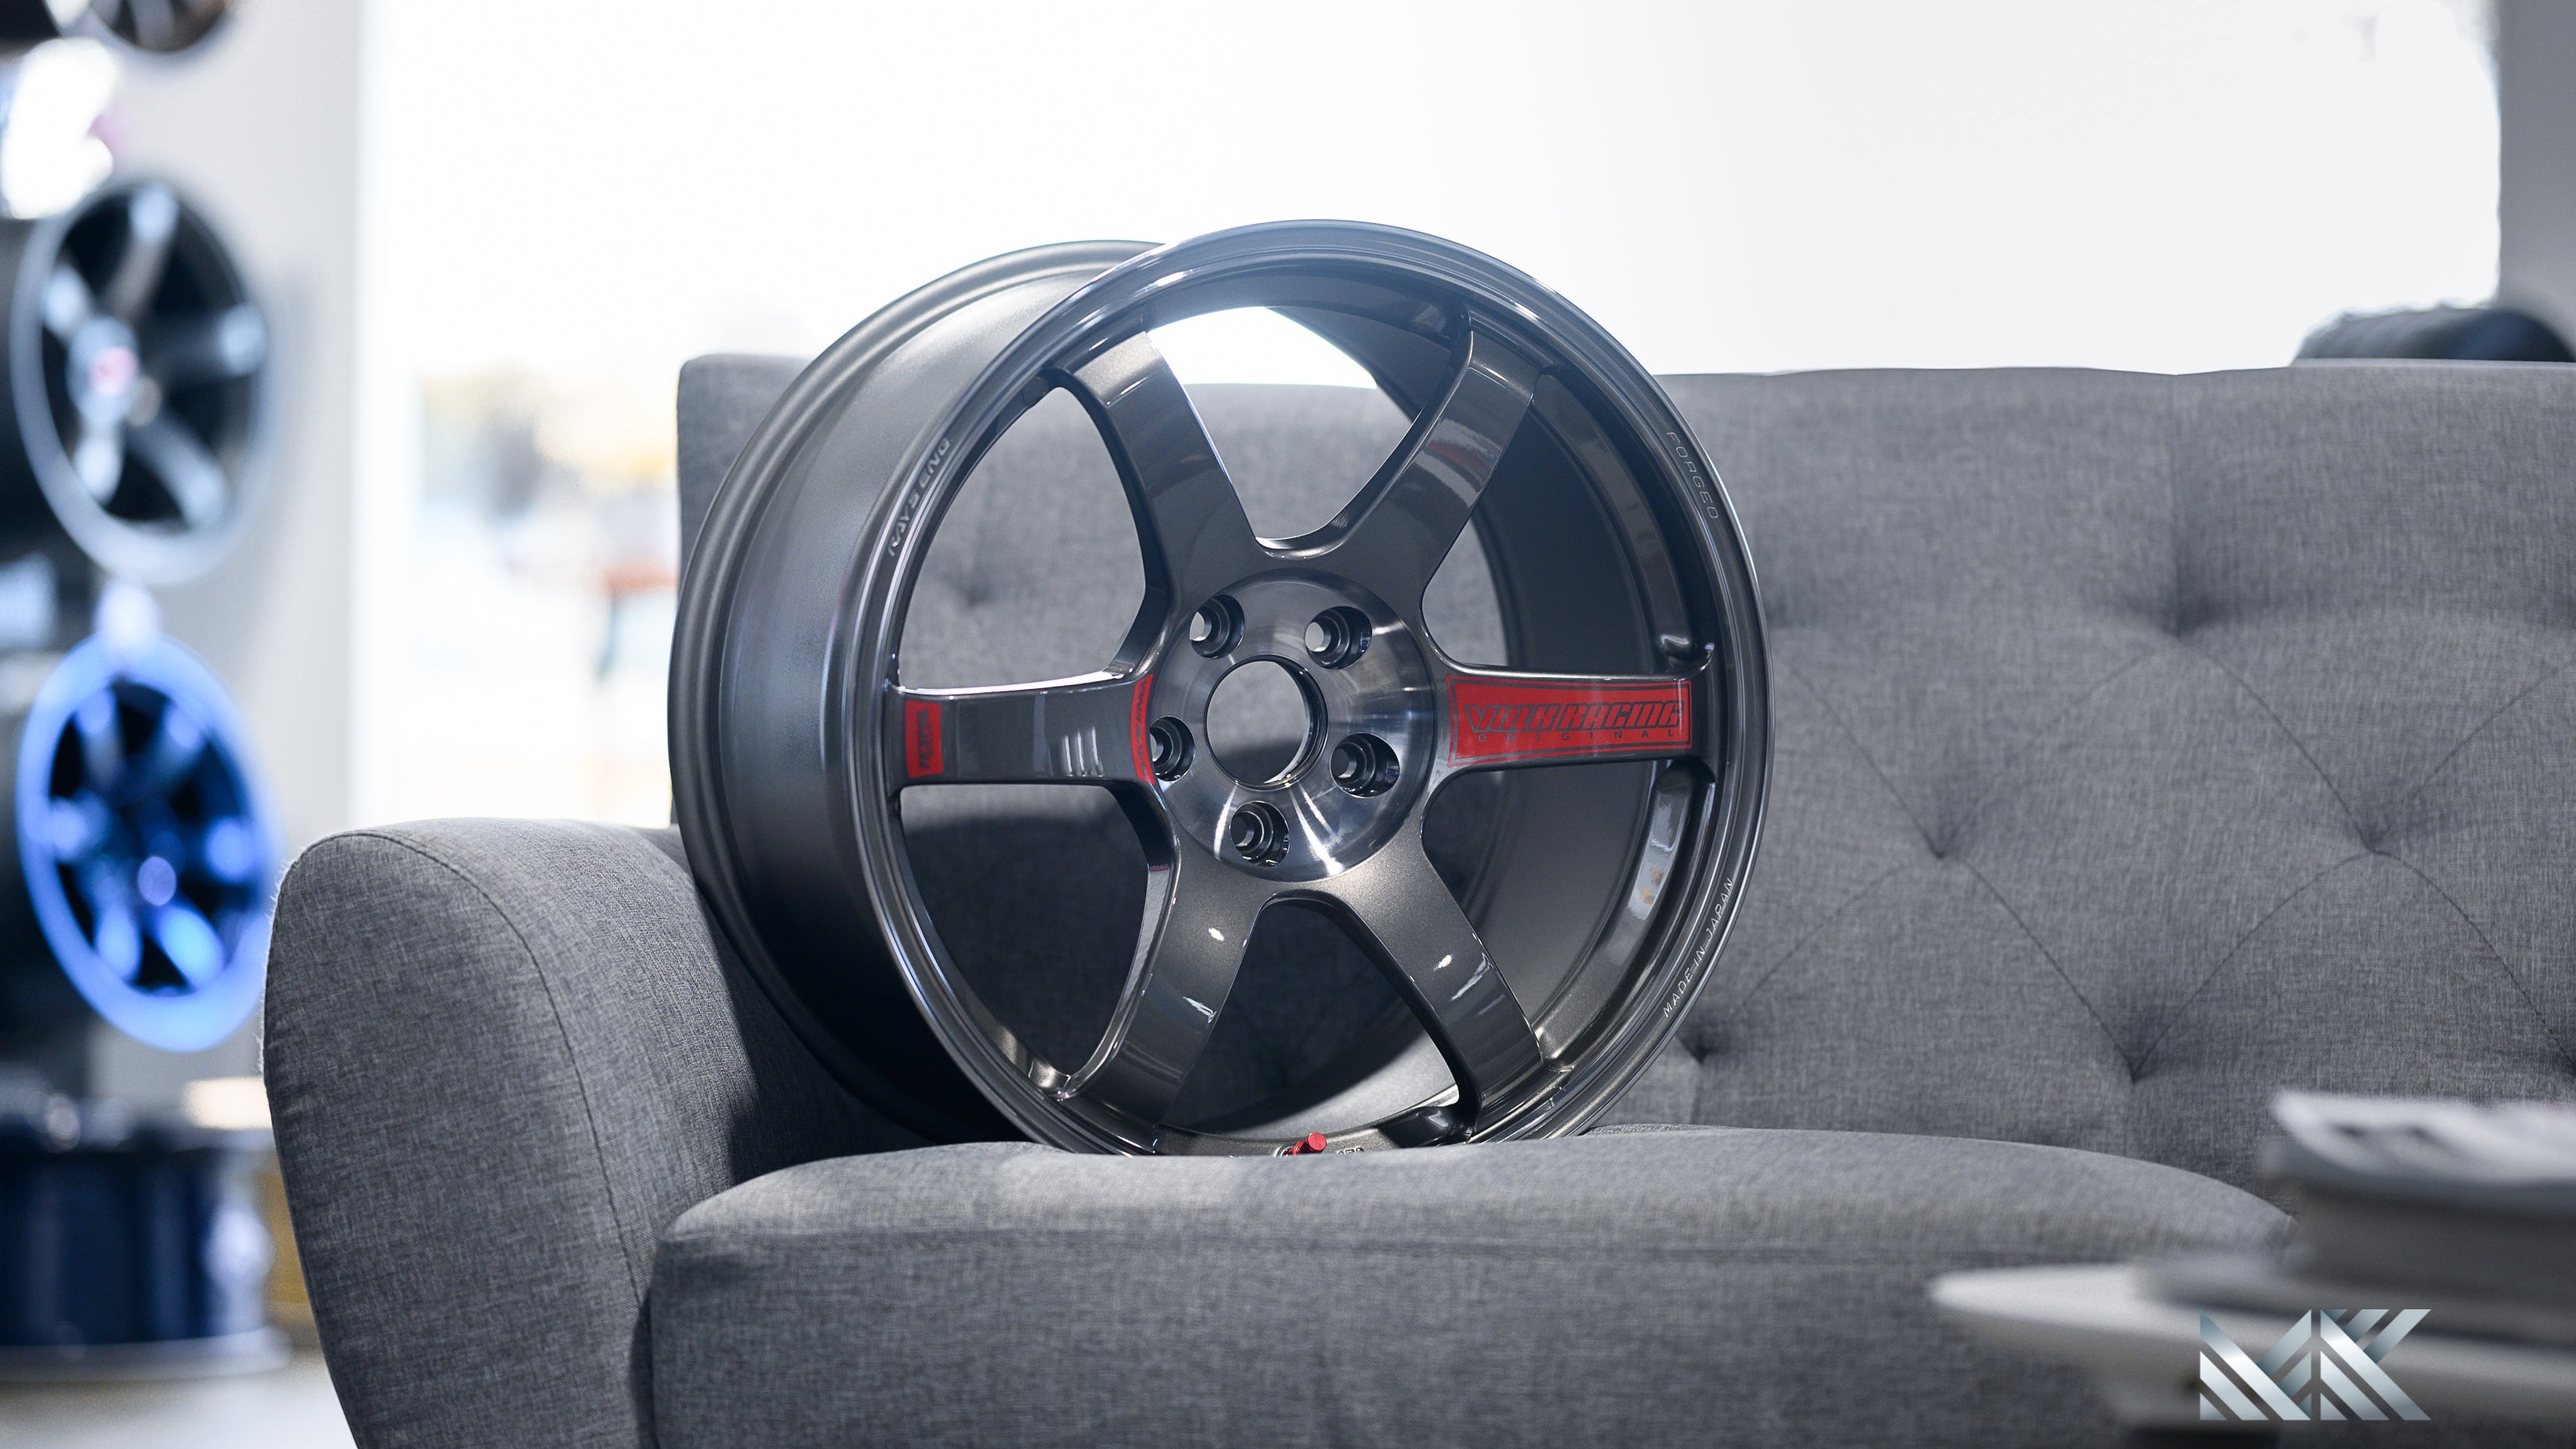 Volk Racing TE37Saga SL for M2 - Premium Wheels from Volk Racing - From just $3950.0! Shop now at MK MOTORSPORTS